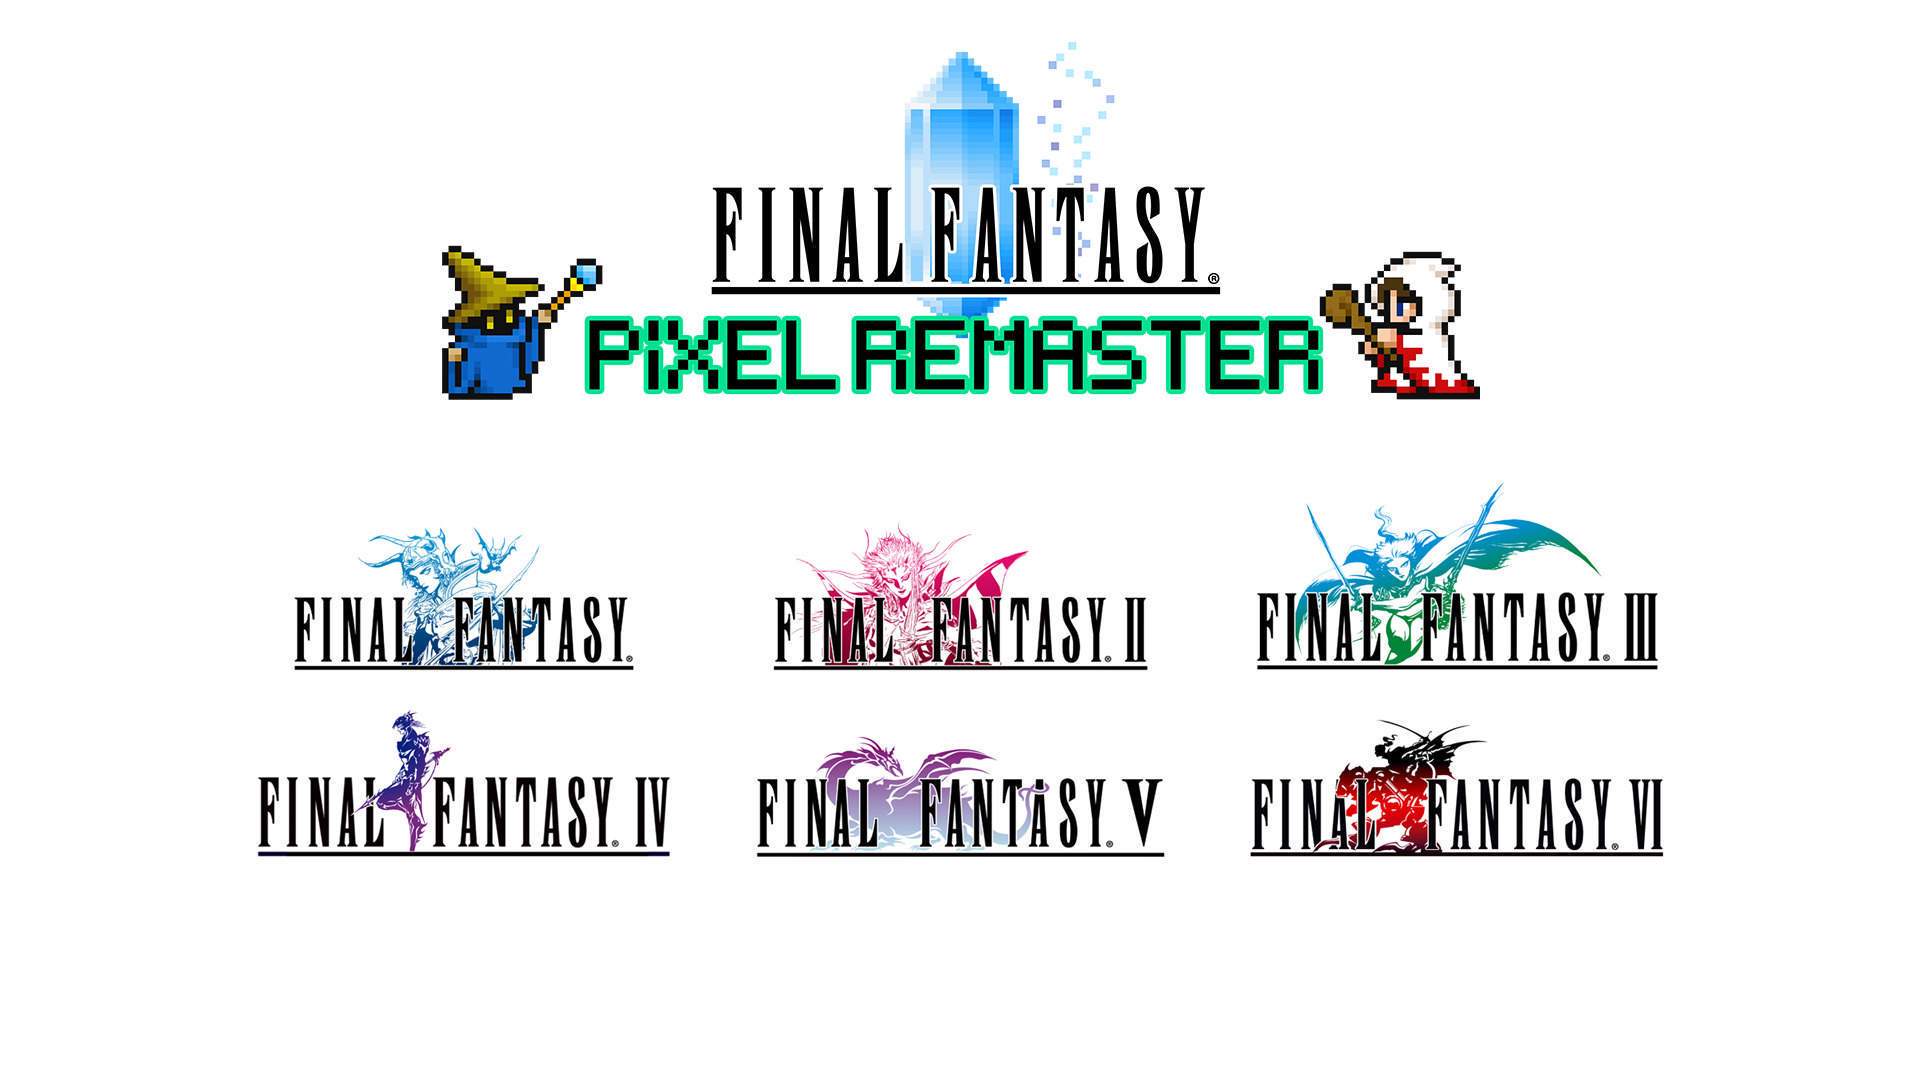 The FINAL FANTASY Pixel Remaster logo sits top centre above FINAL FANTASY 1-6 logos